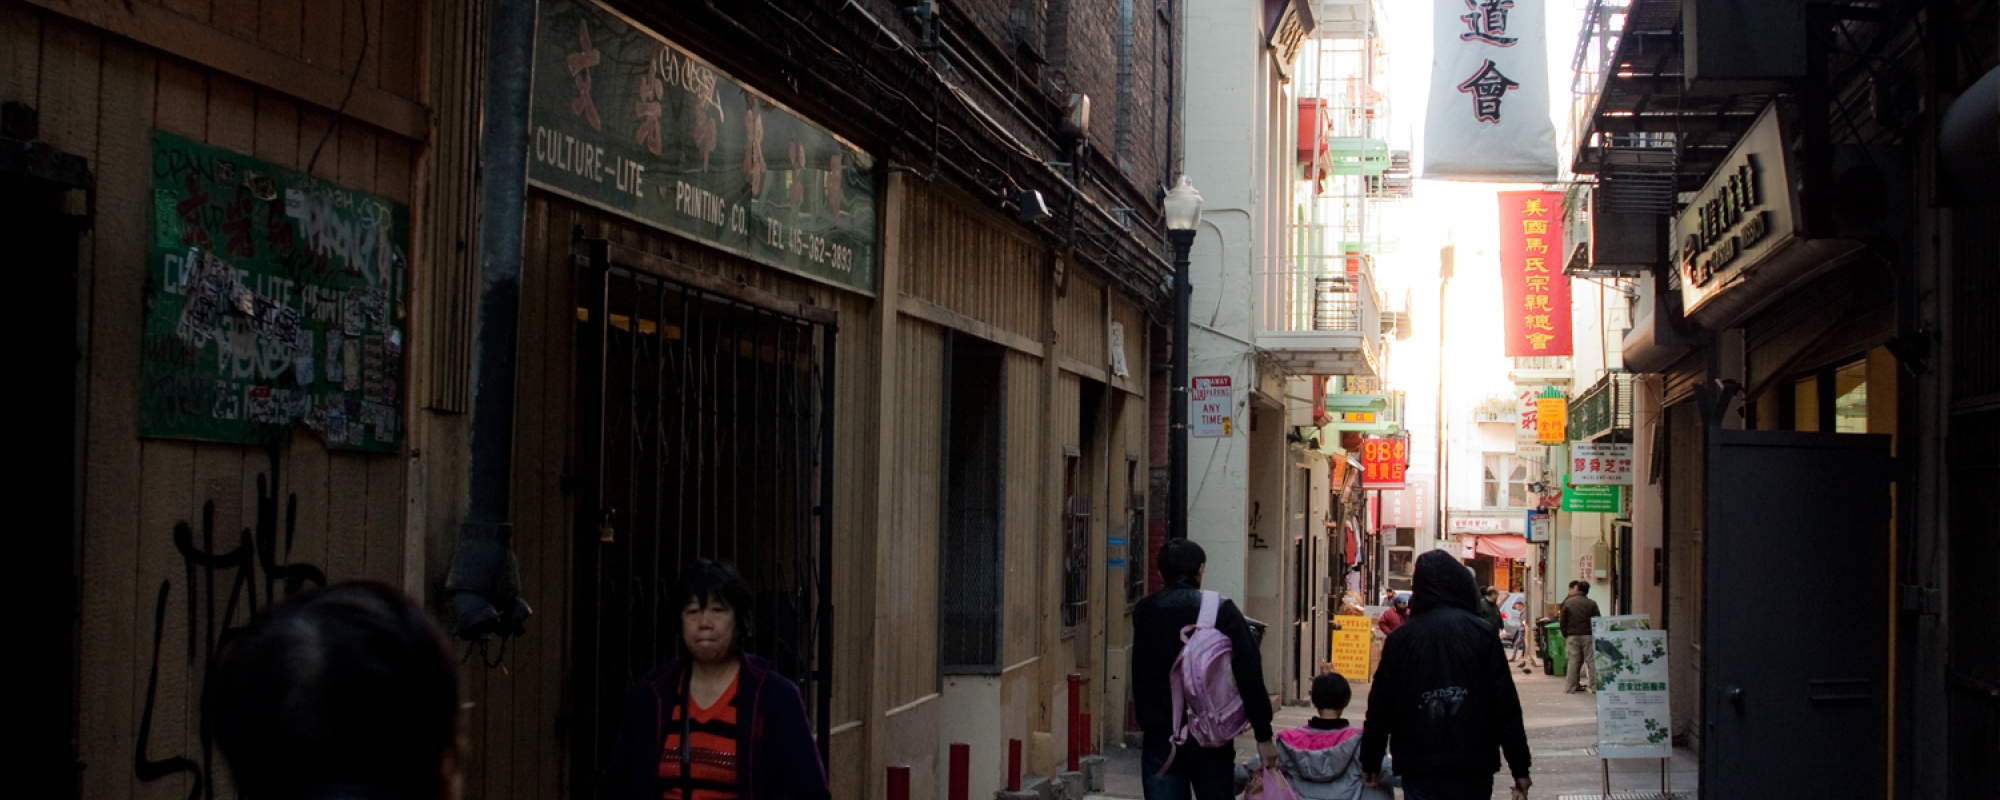 Chinatown Alleyway Renovation Program